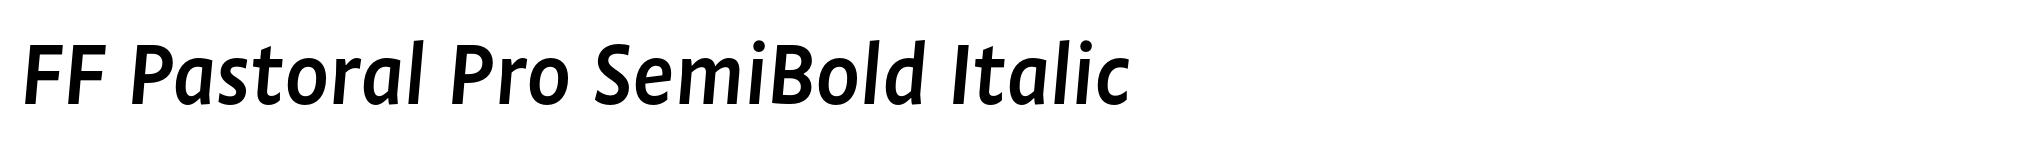 FF Pastoral Pro SemiBold Italic image